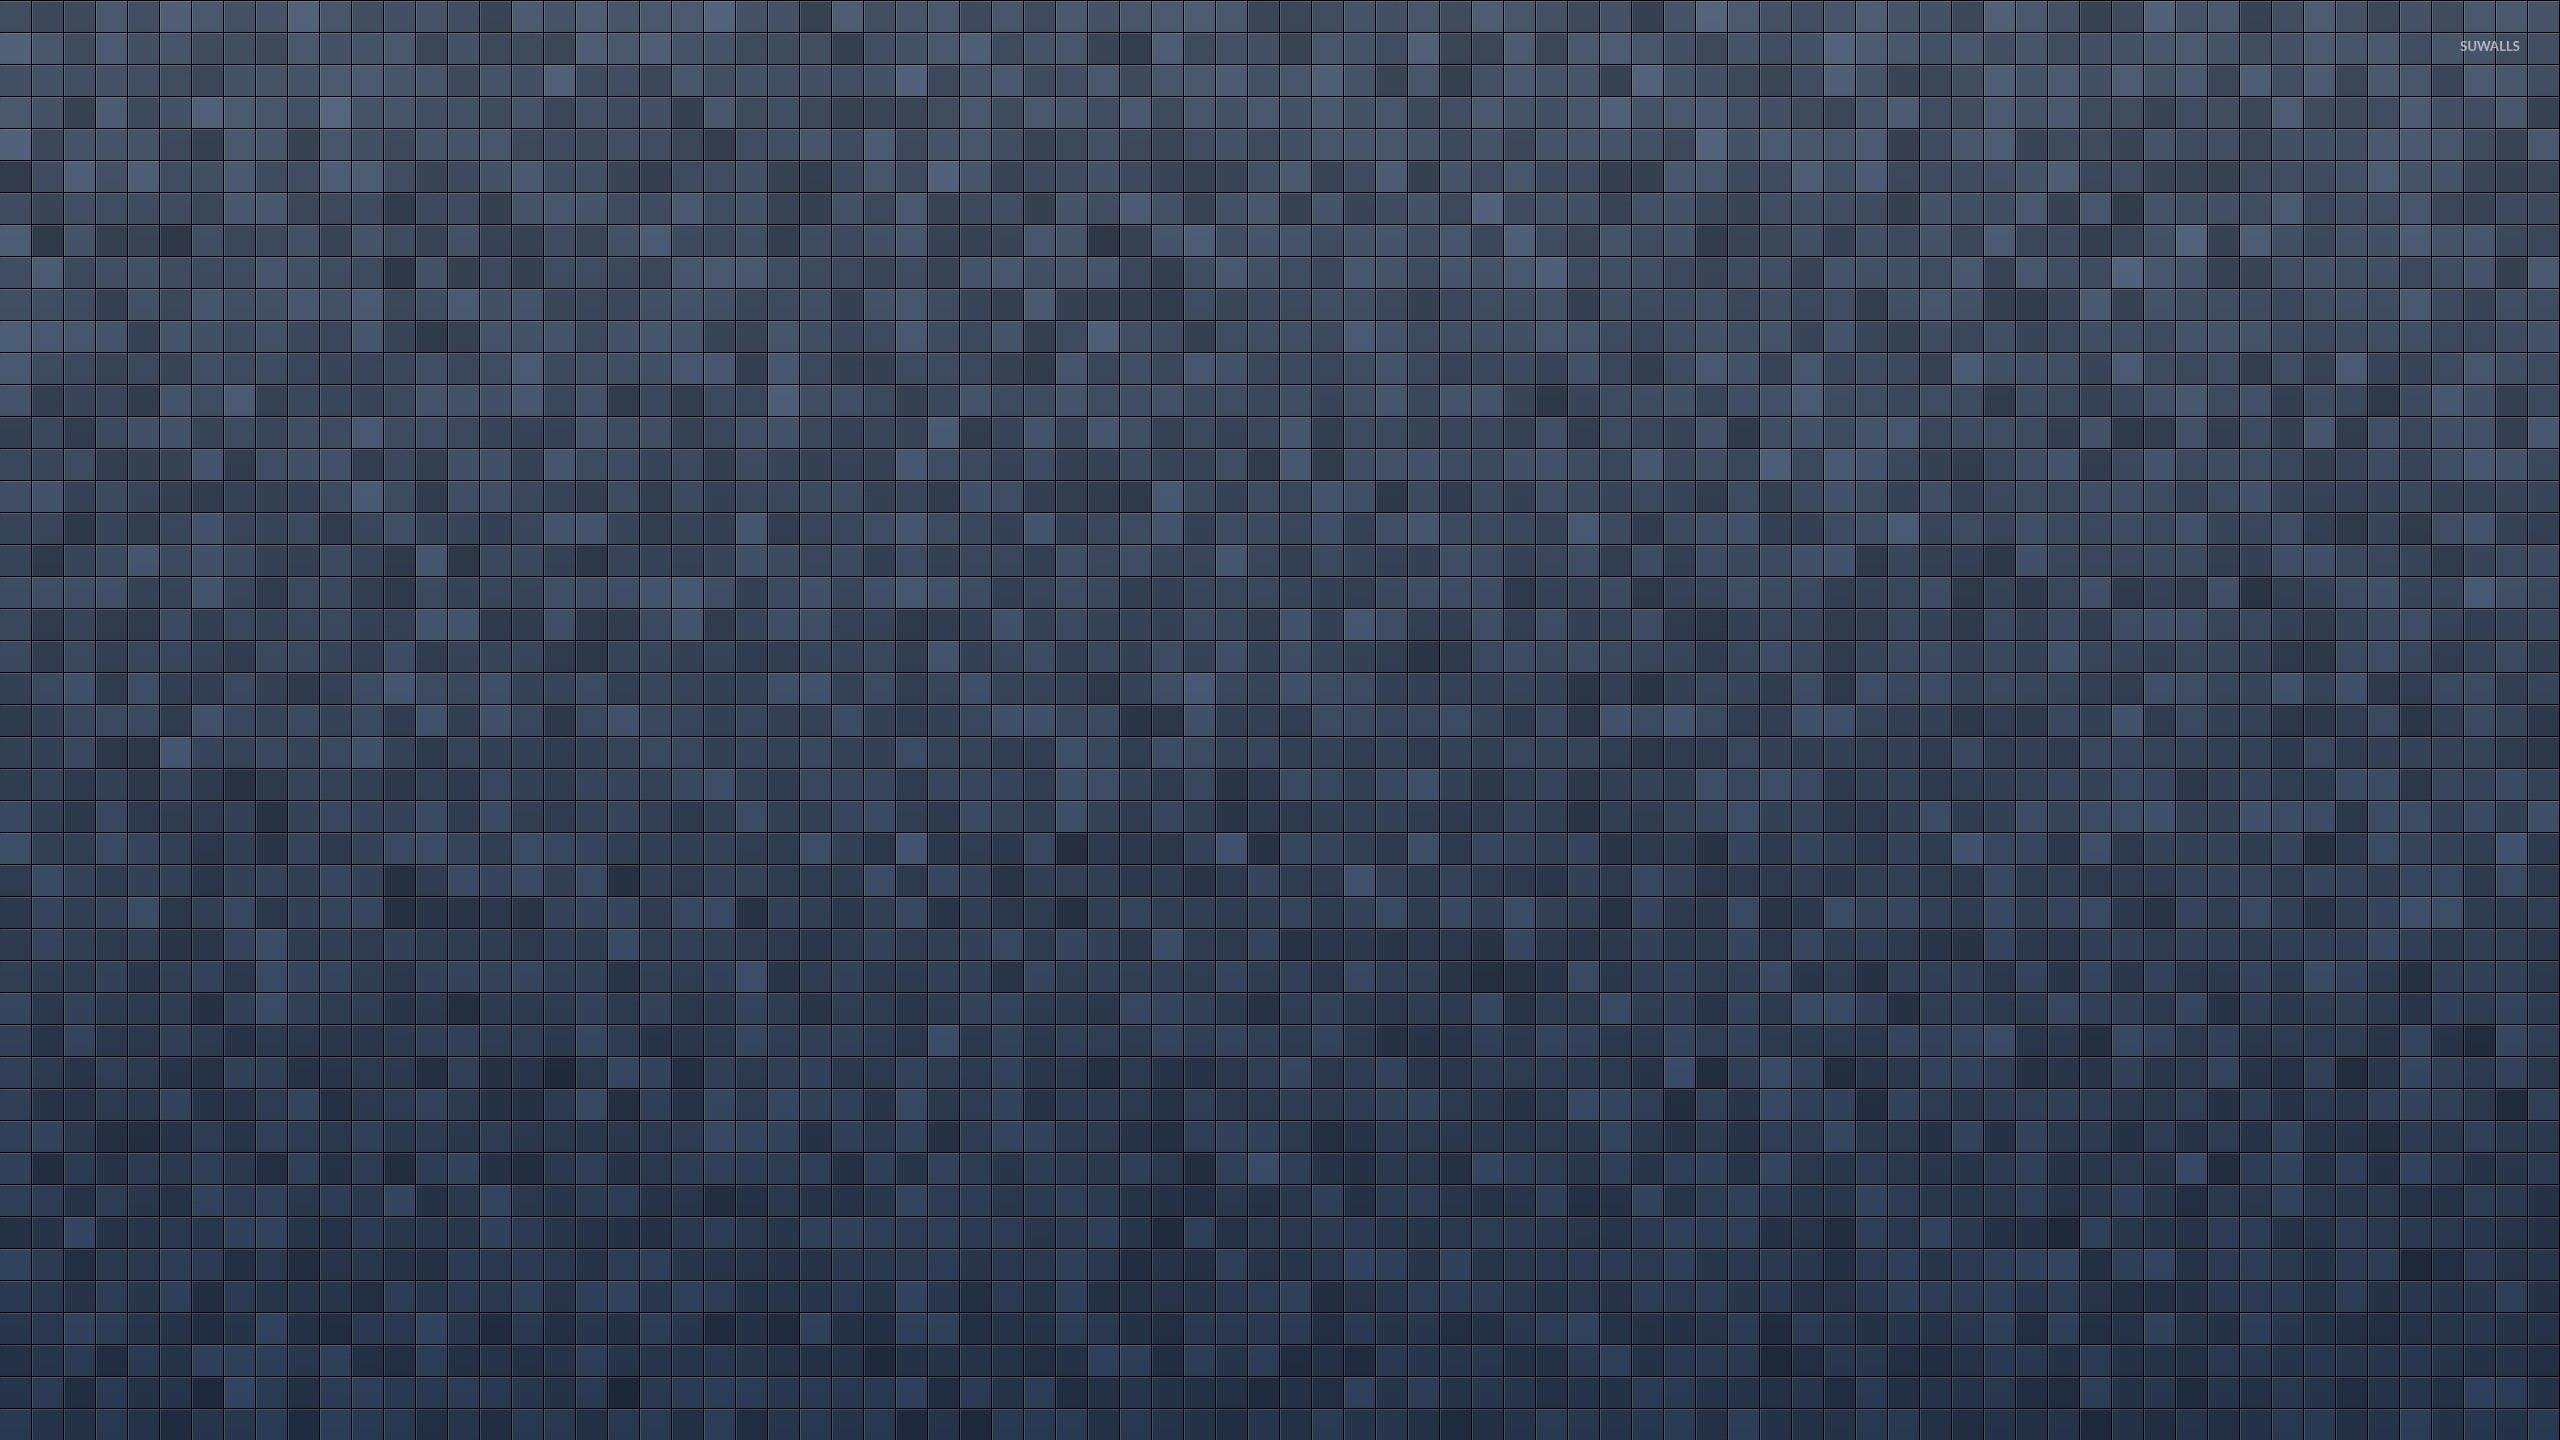 Blue Squares Wallpaper Abstract Wallpapers 45486 Afalchi Free images wallpape [afalchi.blogspot.com]